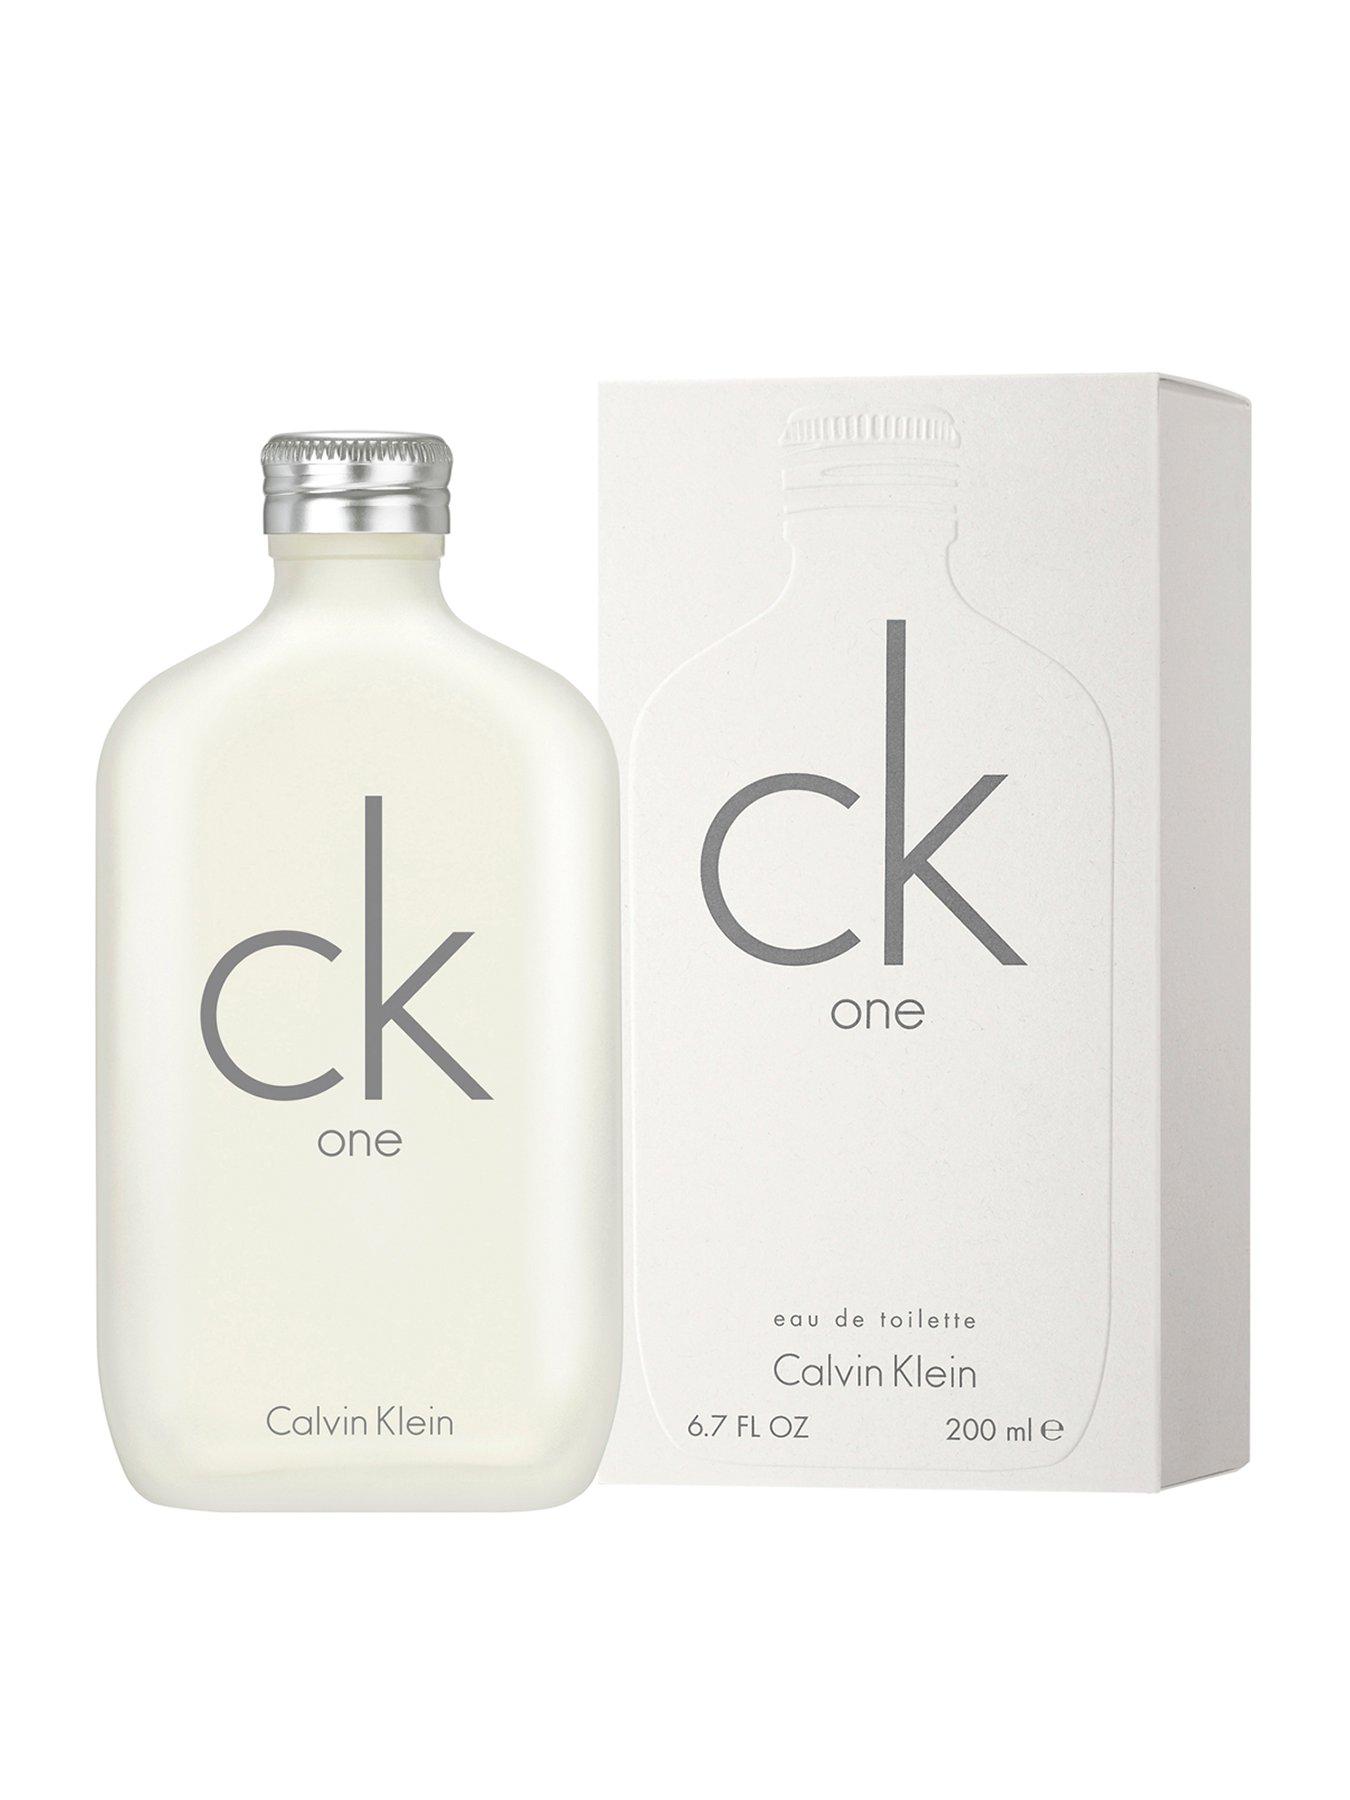 Calvin Klein CK One 200ml Eau de Toilette | Very.co.uk